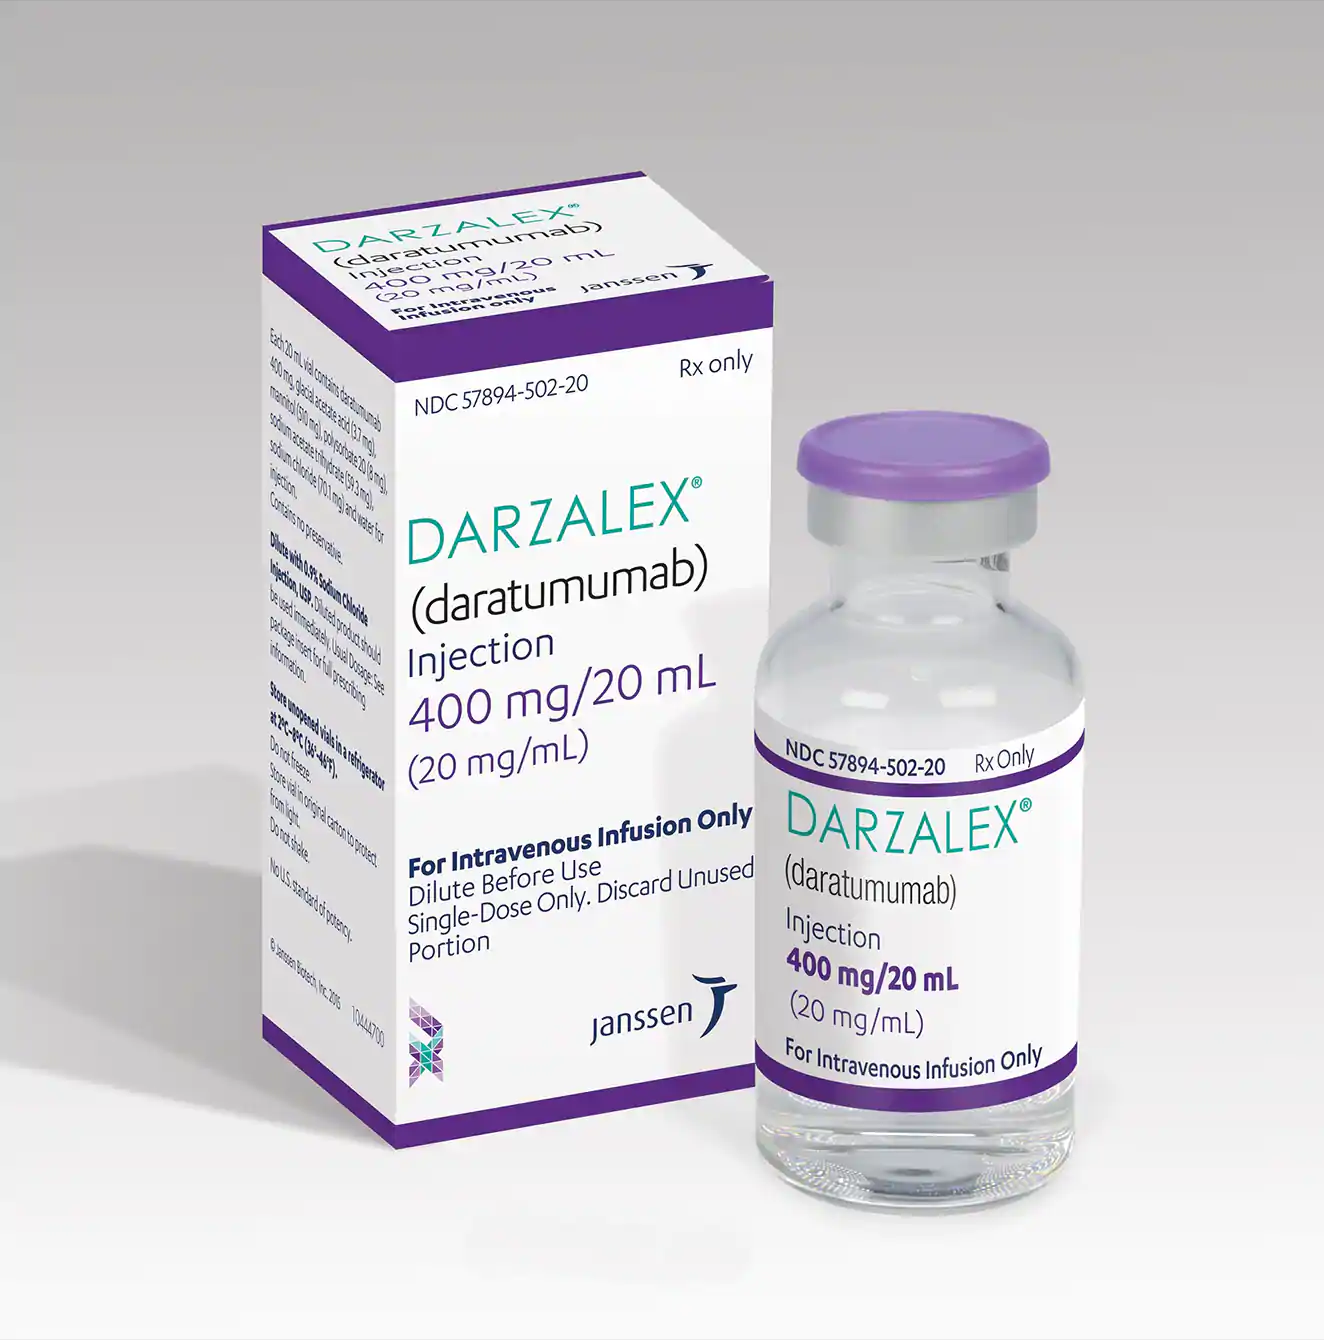 DARZALEX（达雷木单抗）适用于治疗既往接受过至少三种治疗的多发性骨髓瘤患者吗？